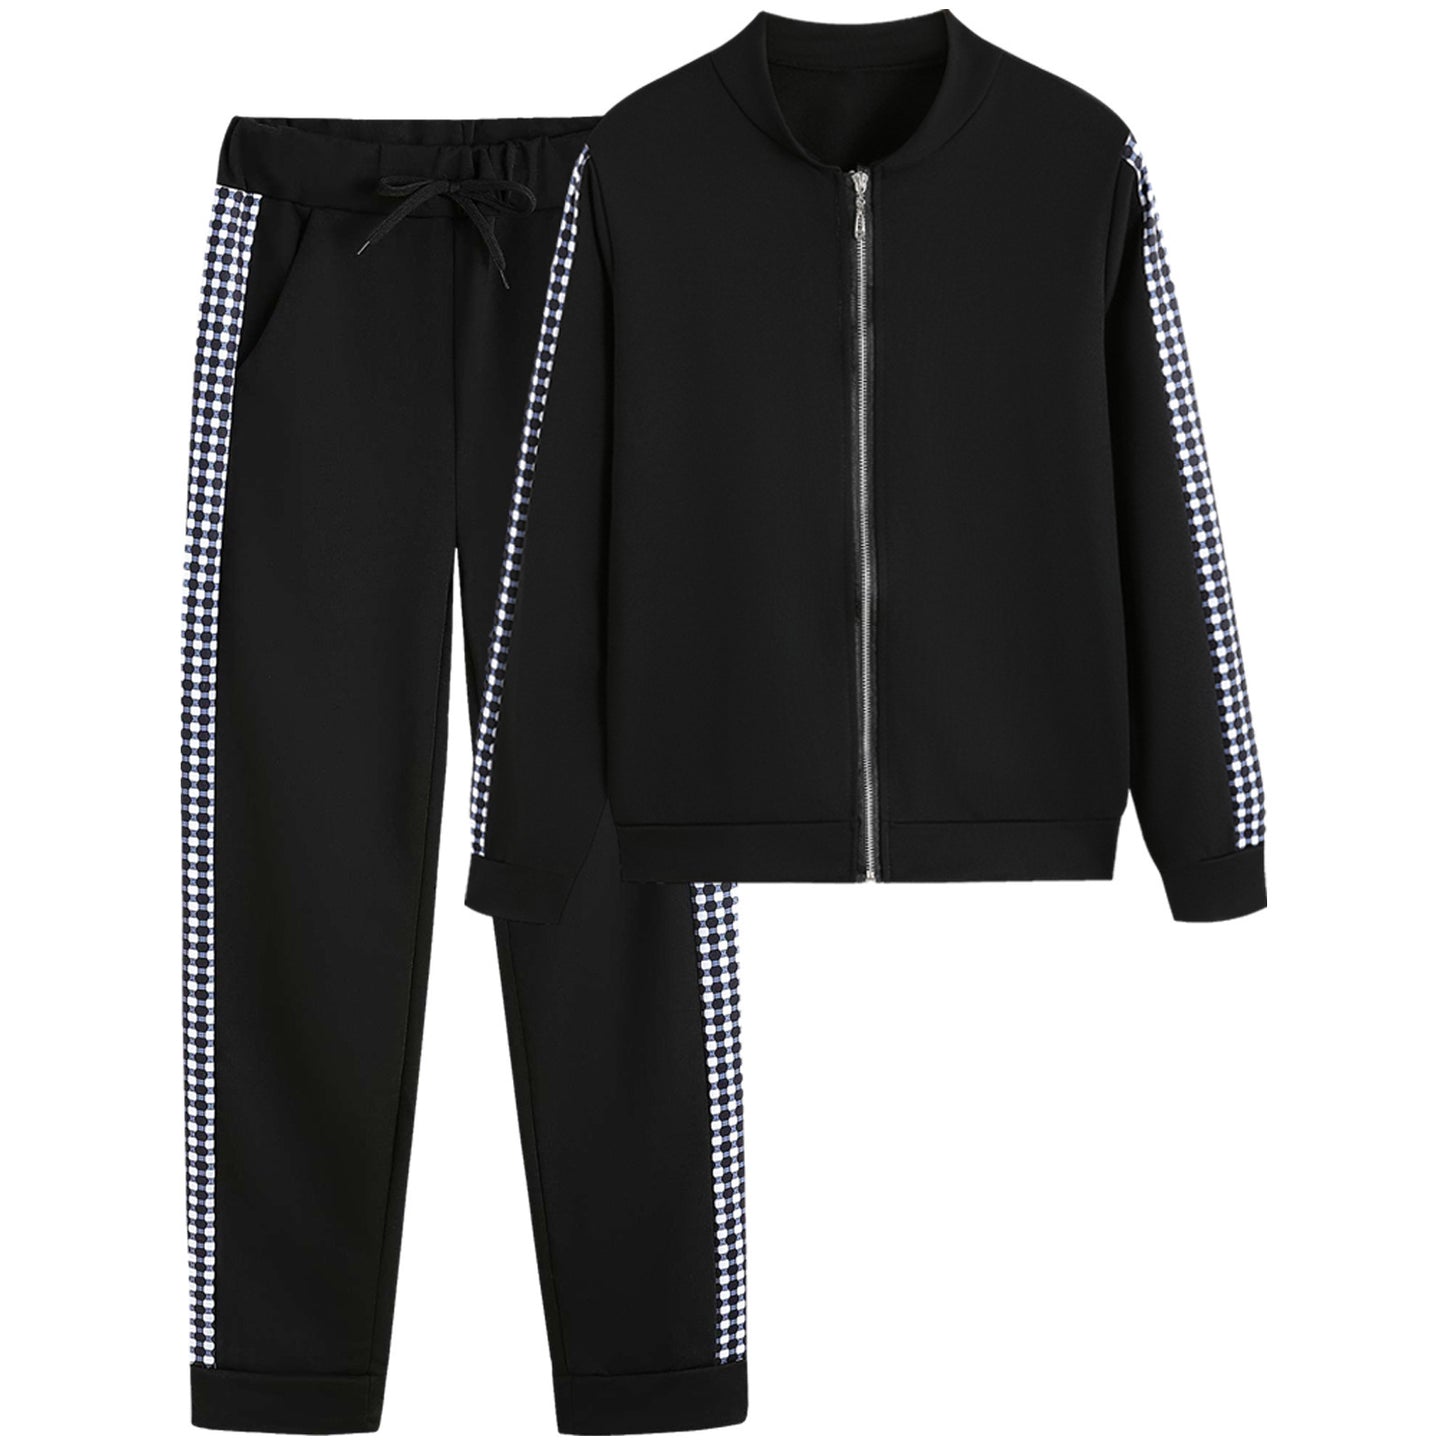 Women's Set Tracksuit Long Sleeve Sportswear ZIp Sweatshirt Pants Suit Two Piece Set Outfits